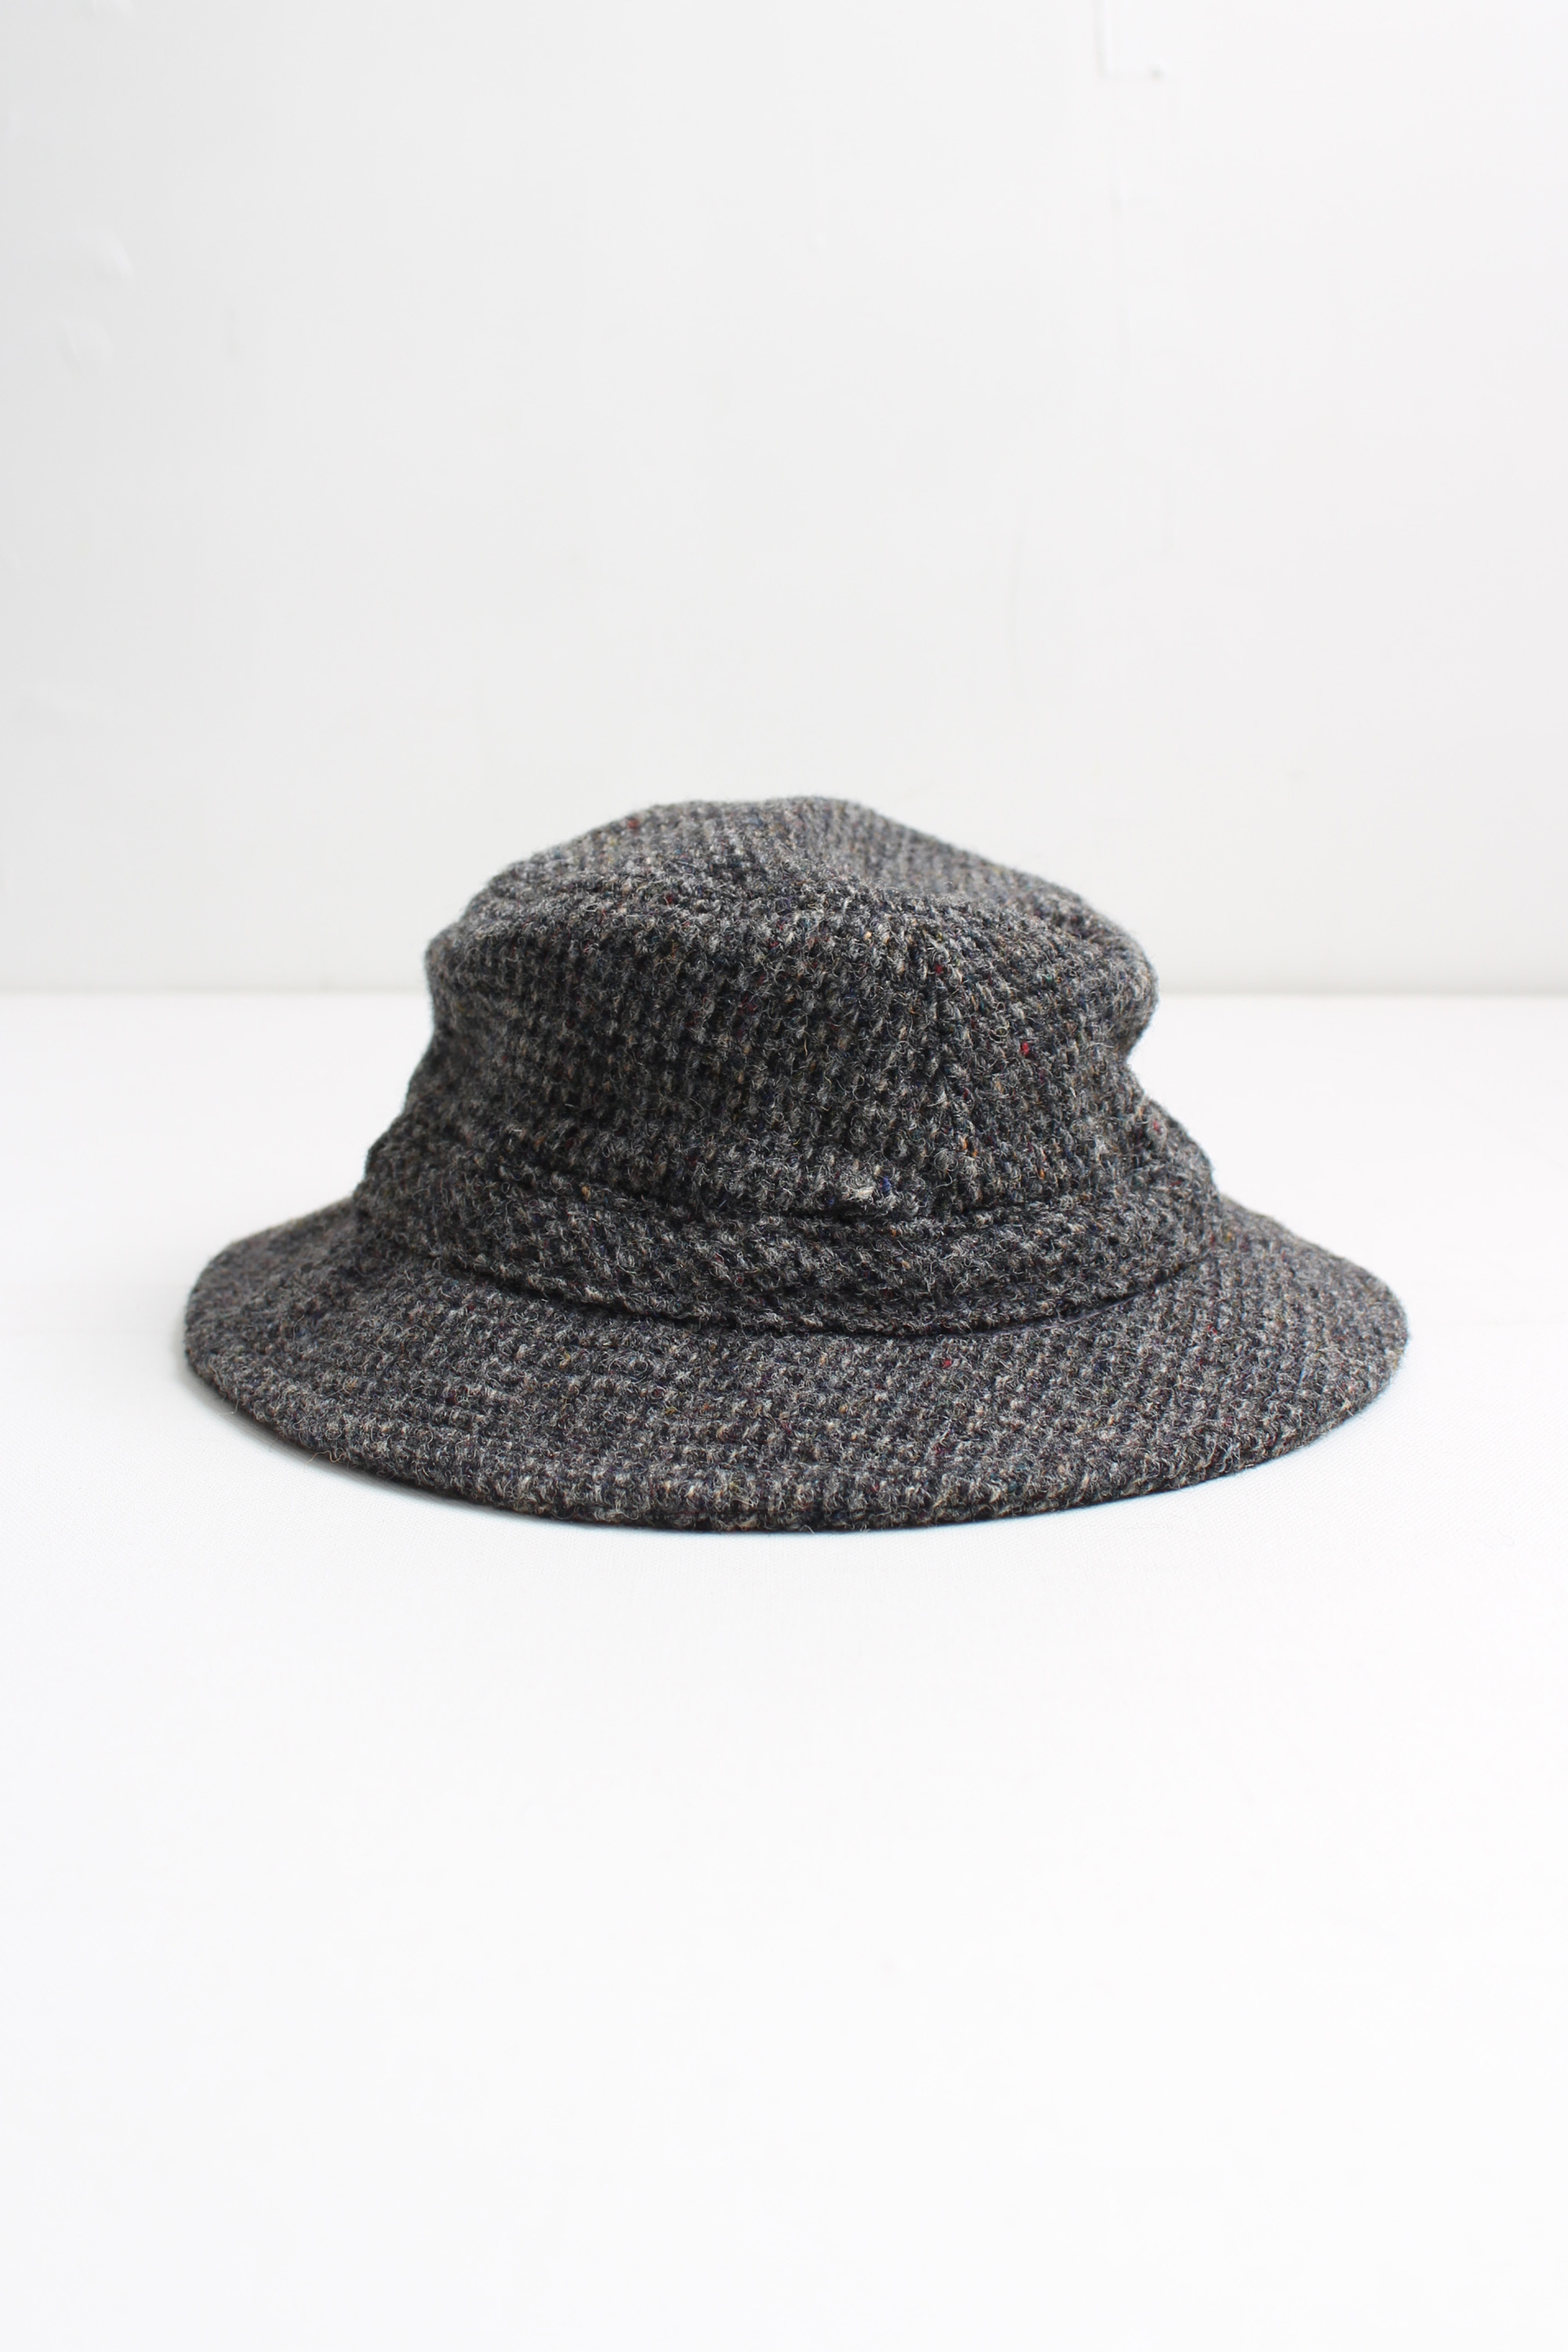 LLBean x Harris Tweed bucket hat